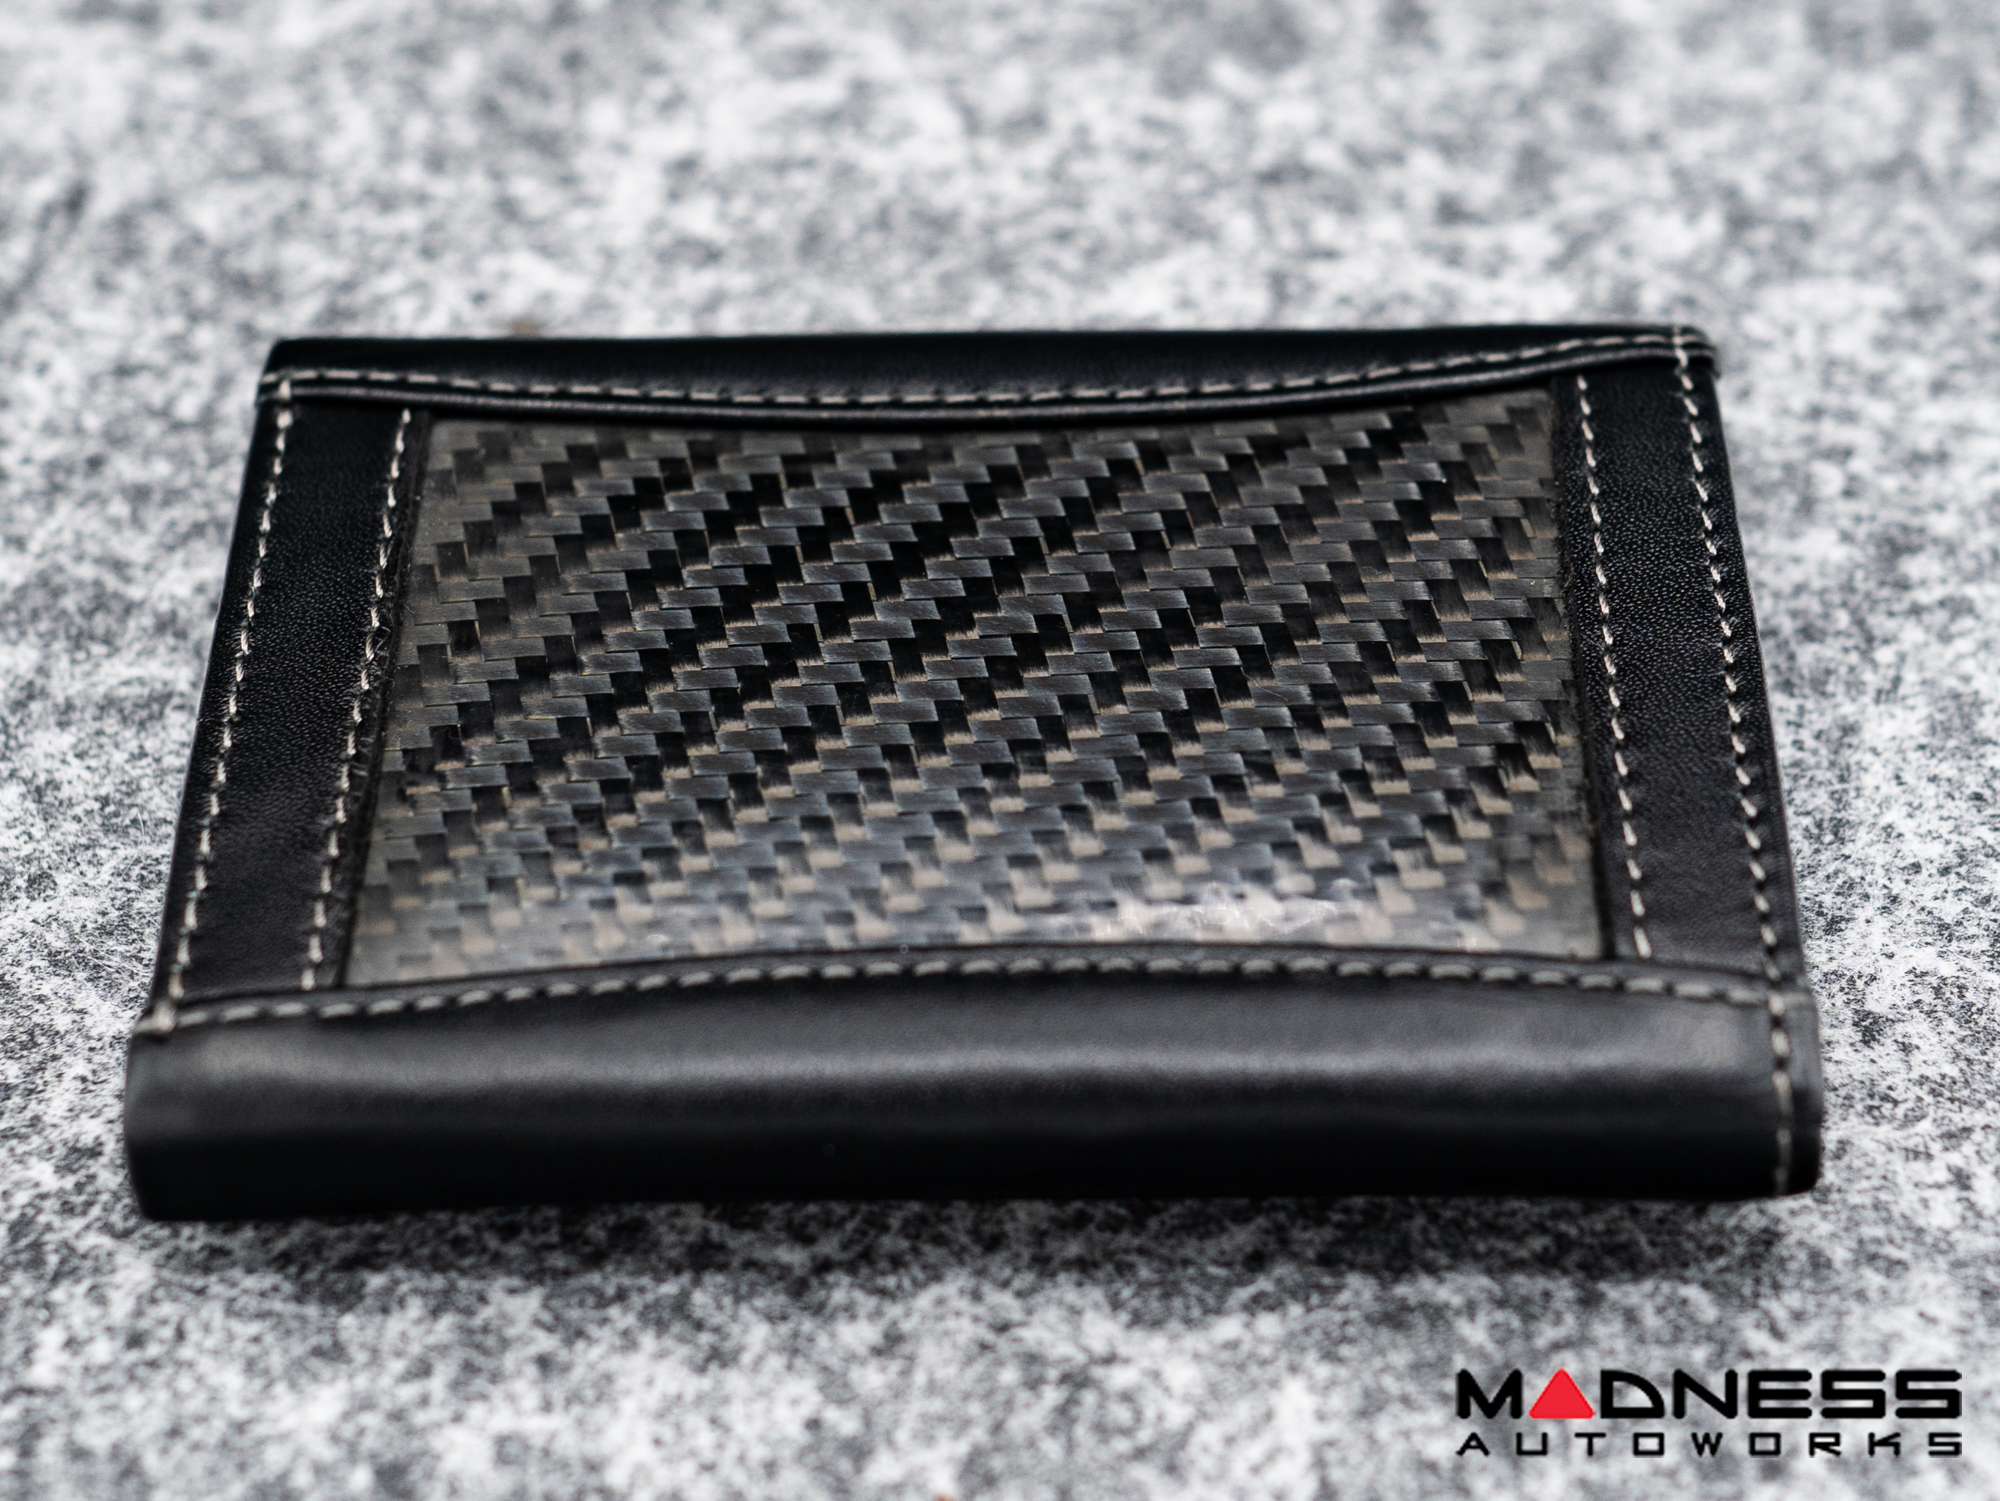 Wallet - Leather/ Carbon Fiber - Tri-Fold 